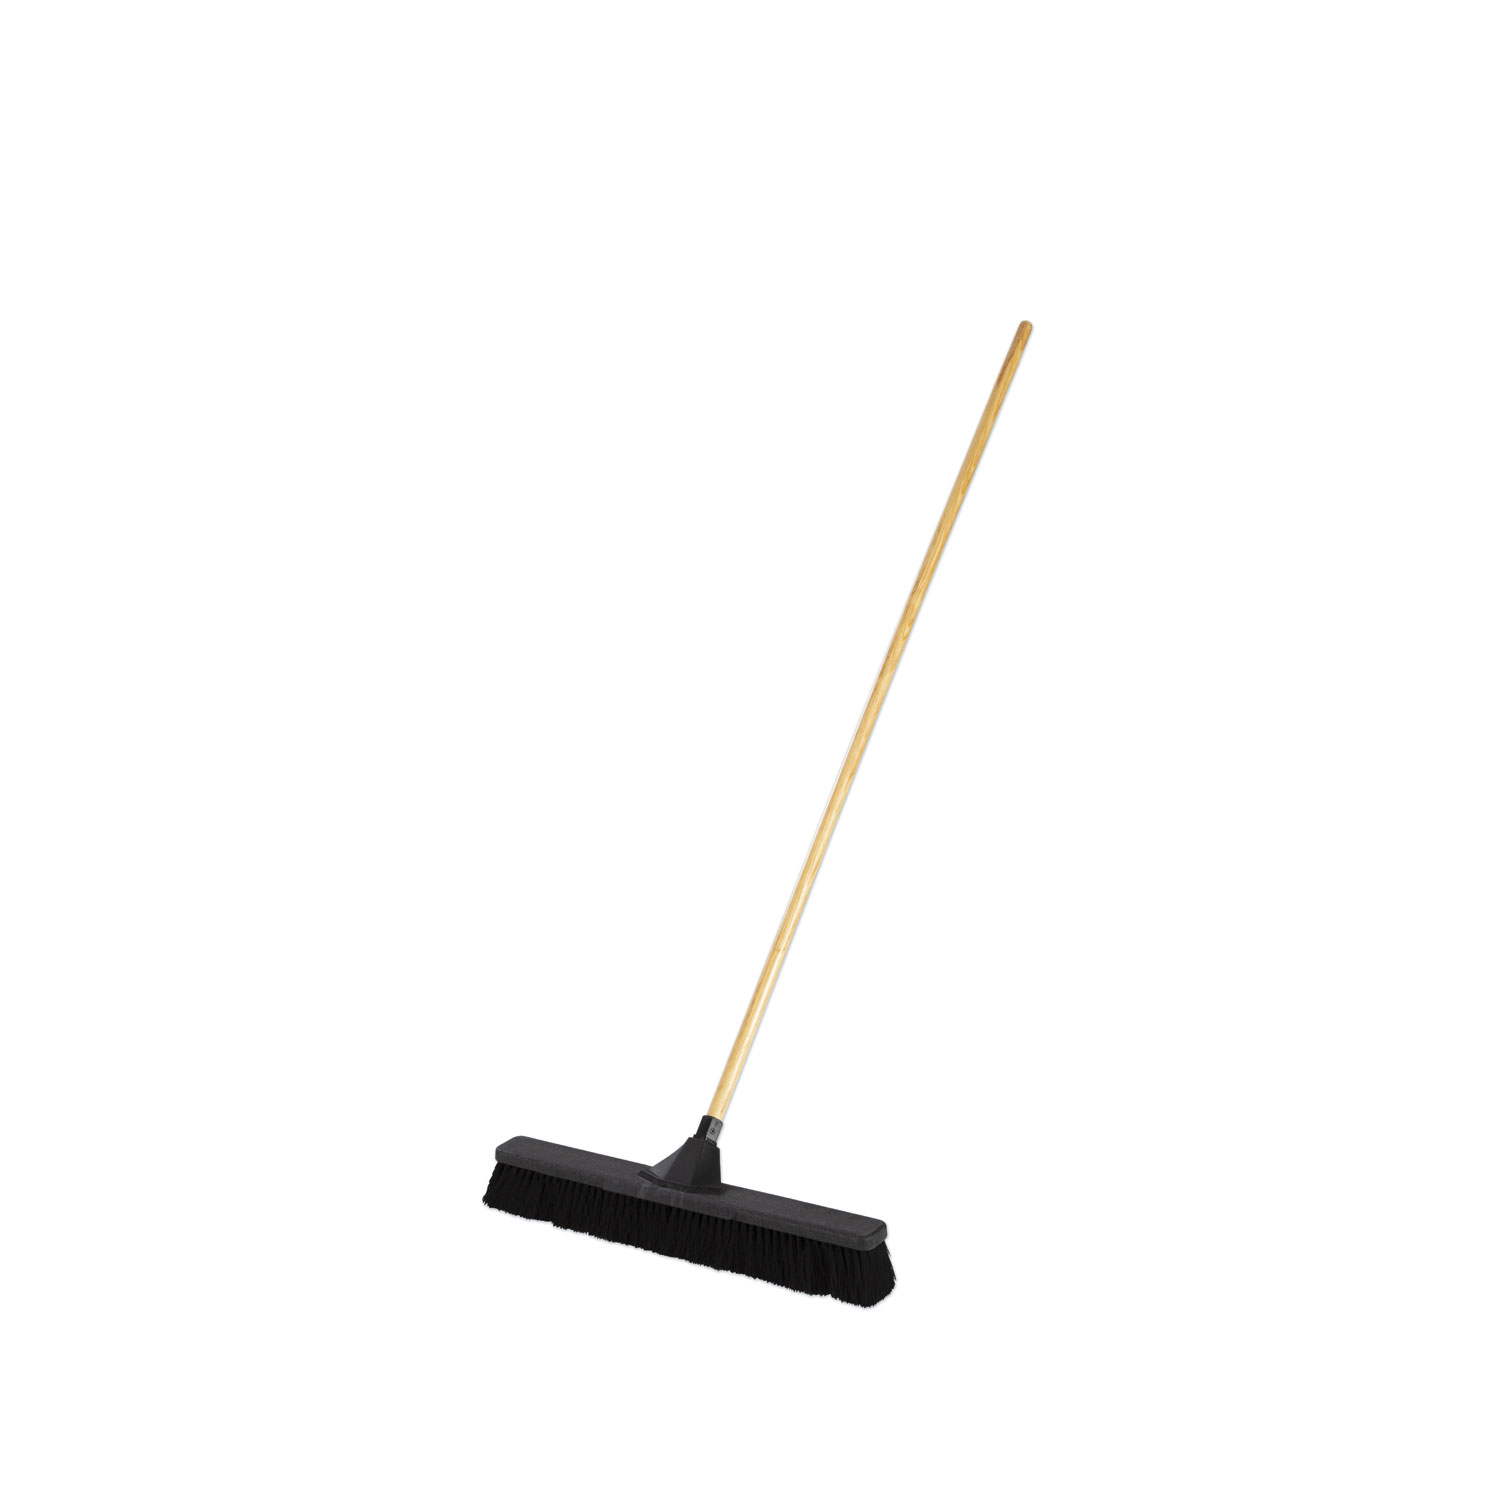  Rubbermaid Commercial 2040000 Push Brooms, 24 Brush, Tampico Bristles, For Fine Debris, 62 Wood Handle, Black (RCP2040000) 